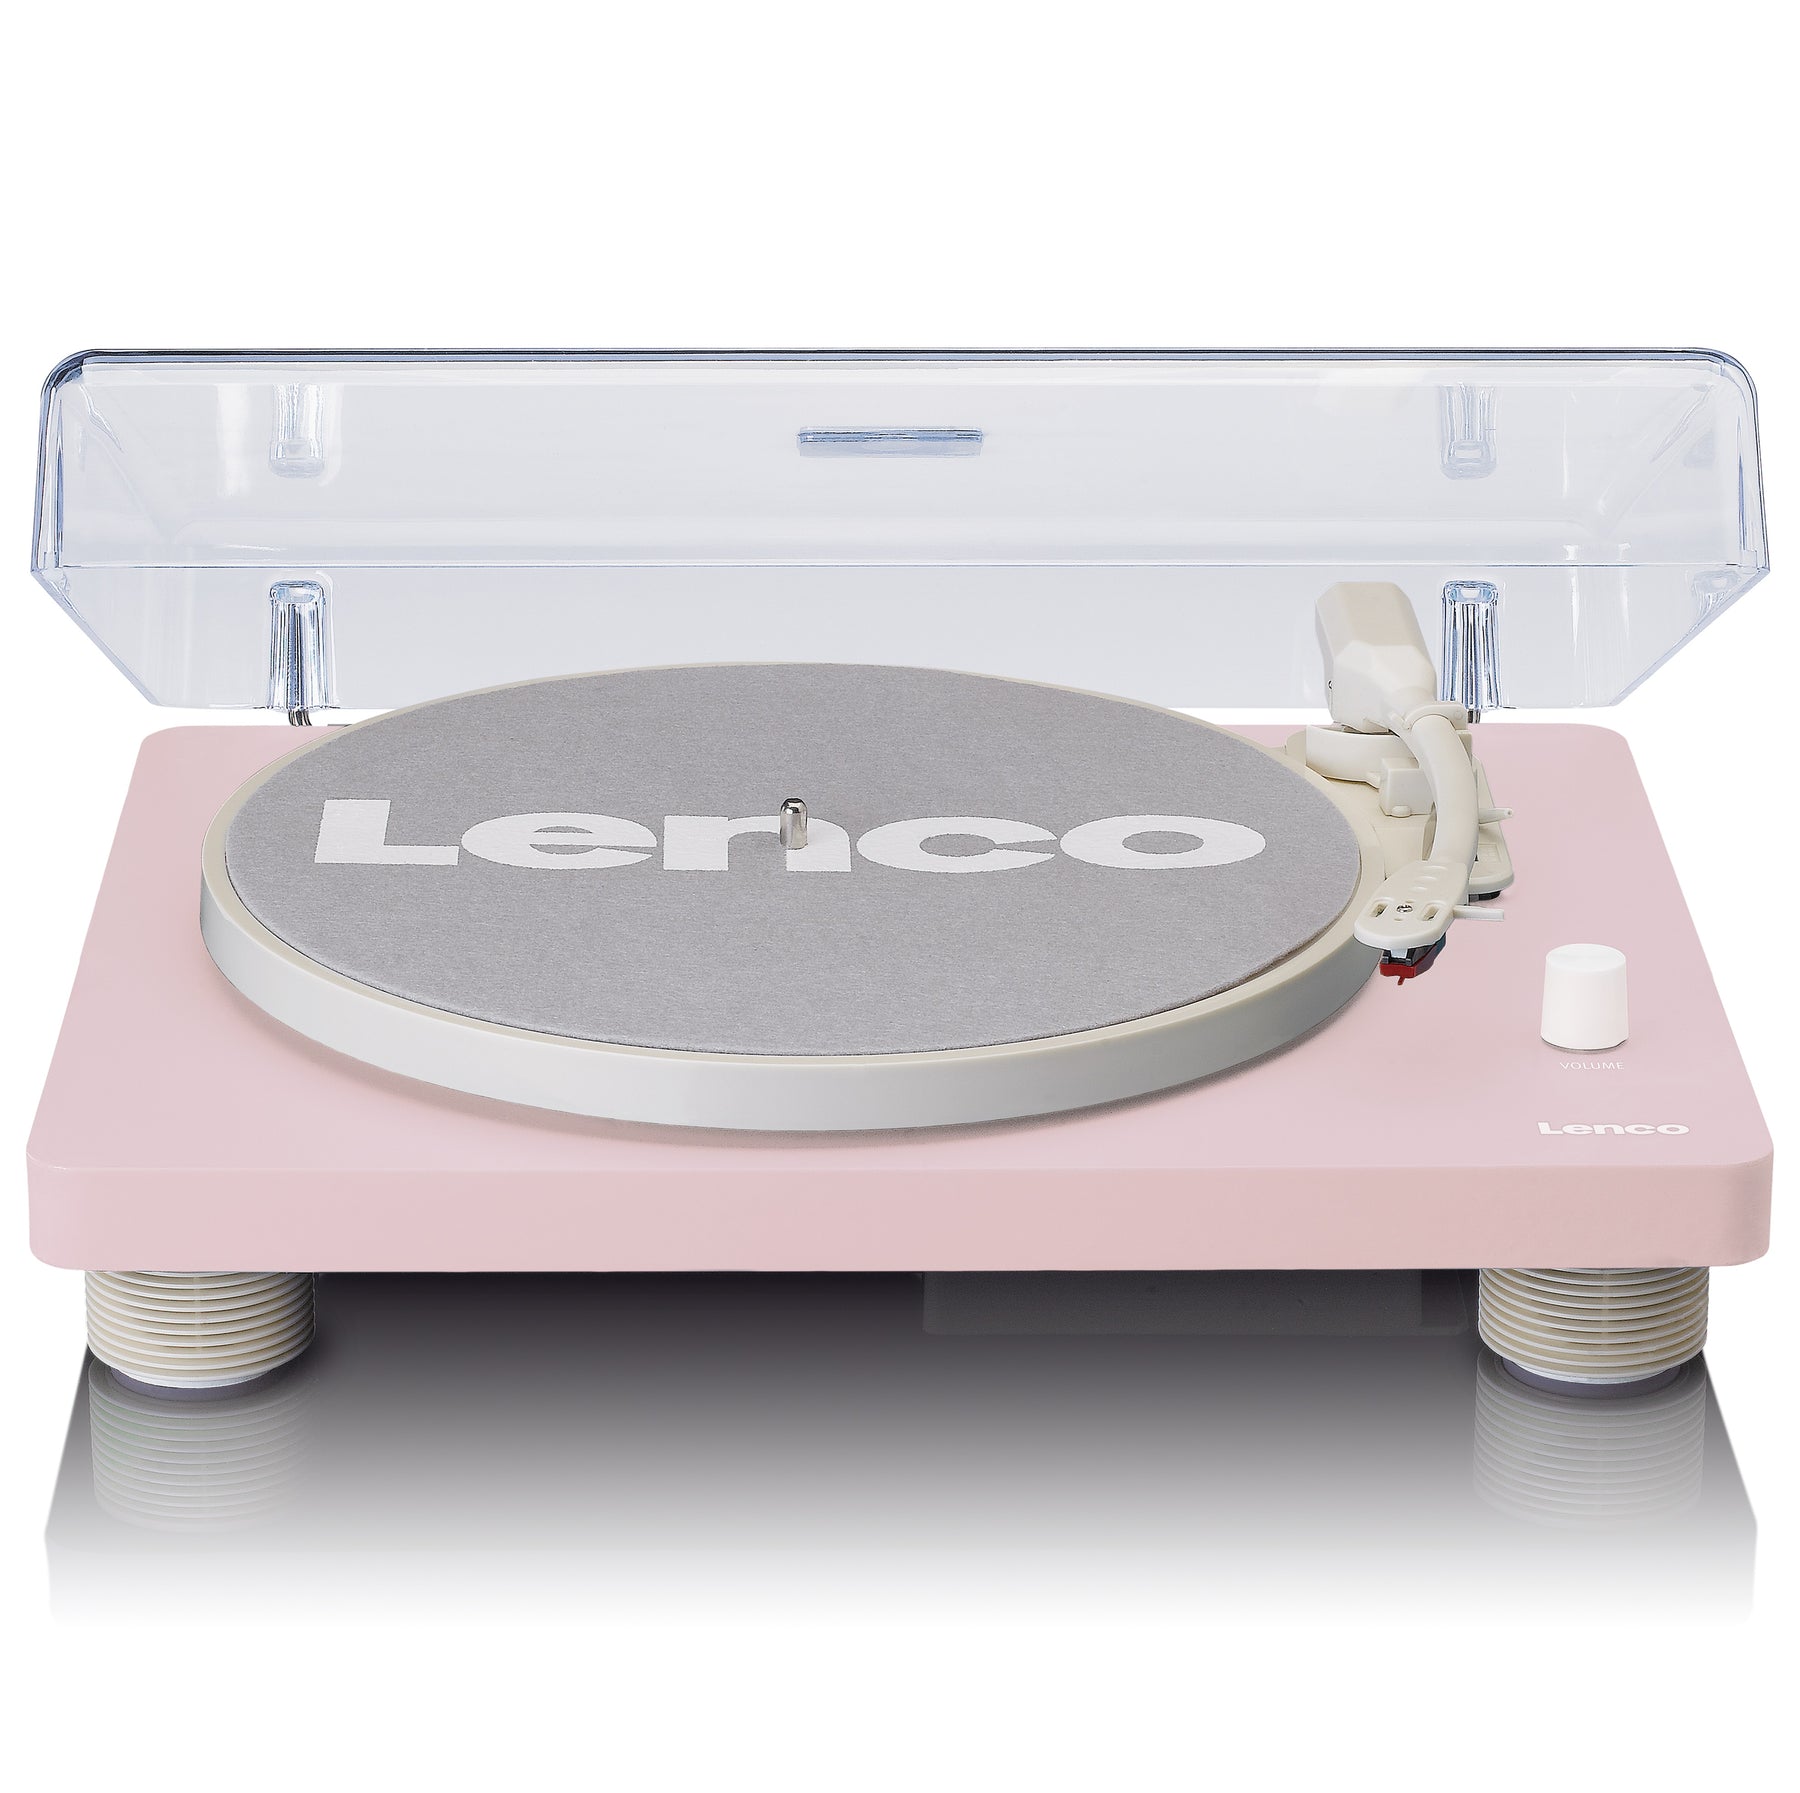 Webshop Jetzt Lenco Lenco.de Offizieller | Webshop Lenco LS-50PK - offiziellen – kaufen? im